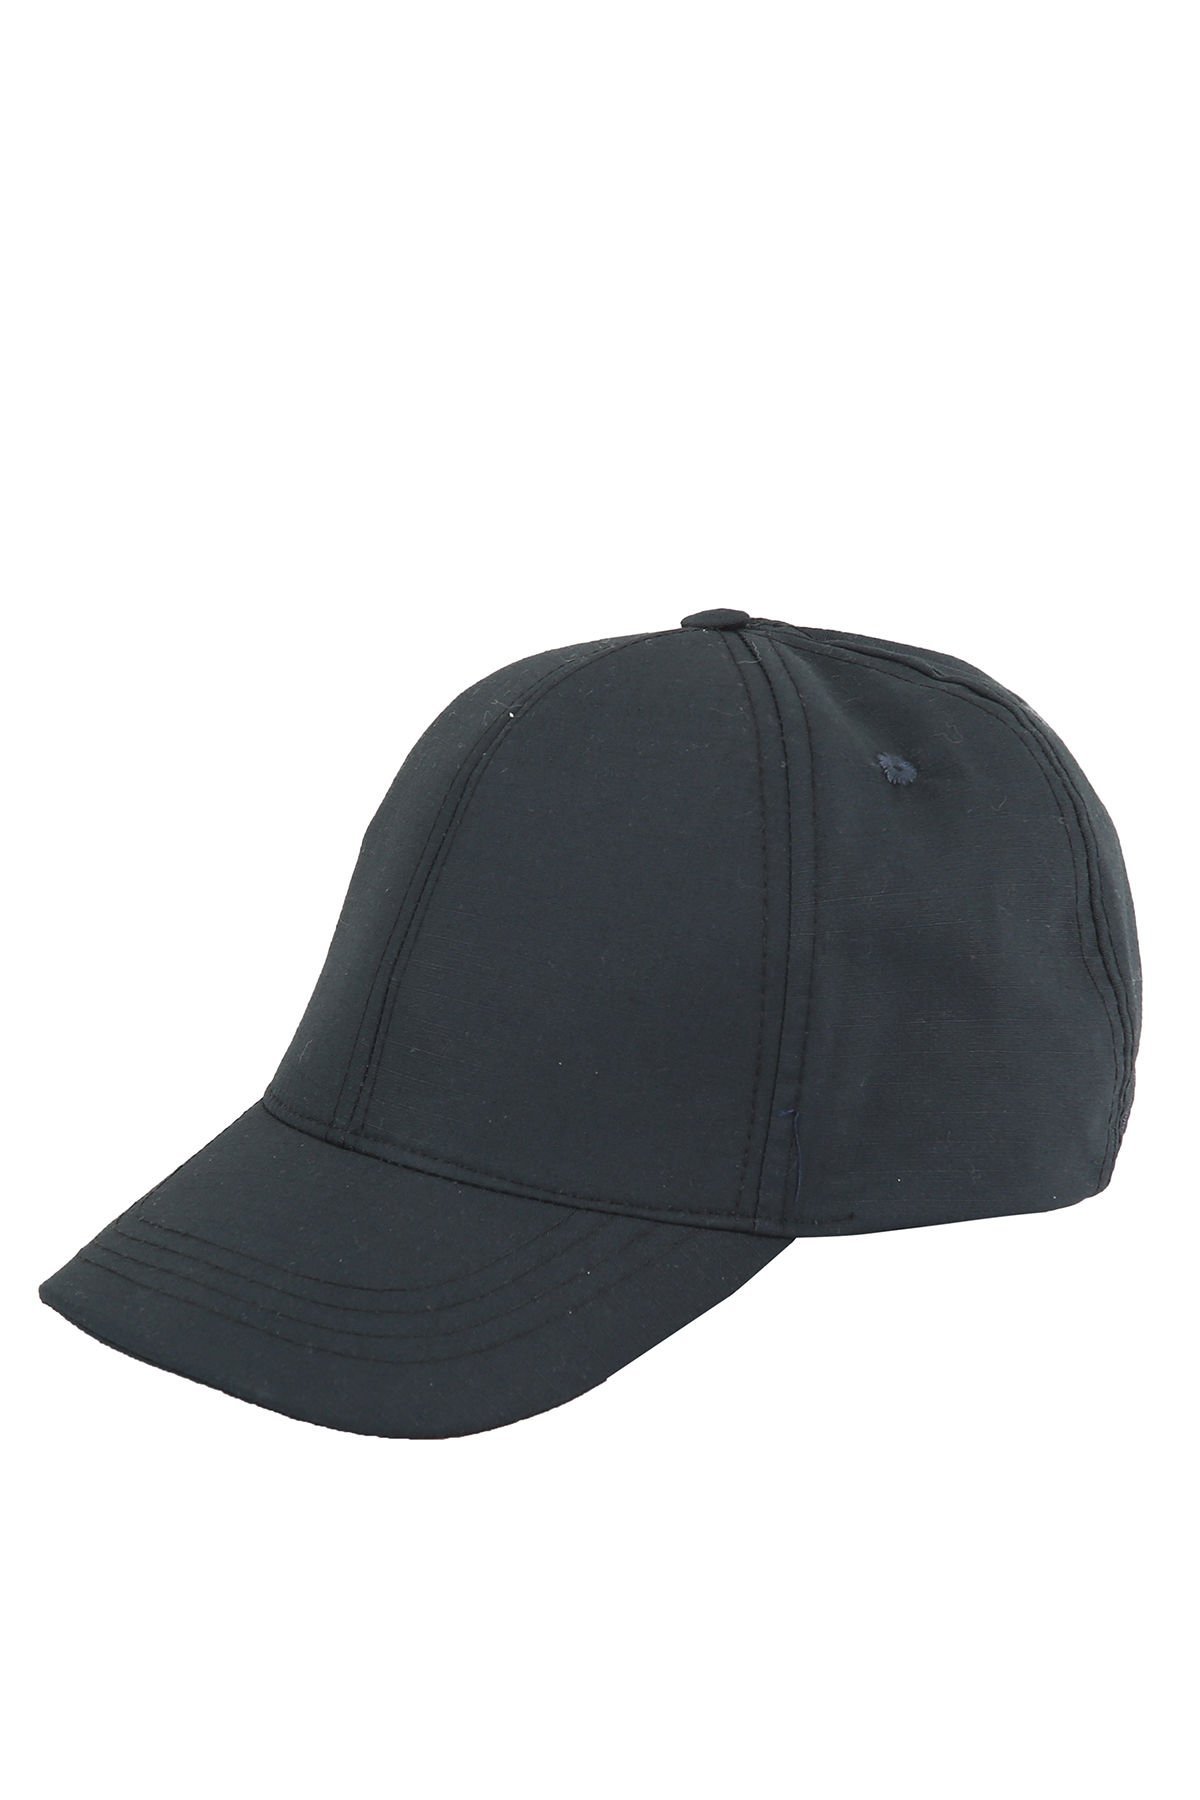 Monel Outdoor Tactical Günlük Siyah Şapka Rahat Kamp Trekking Giyim 4 Mevsim